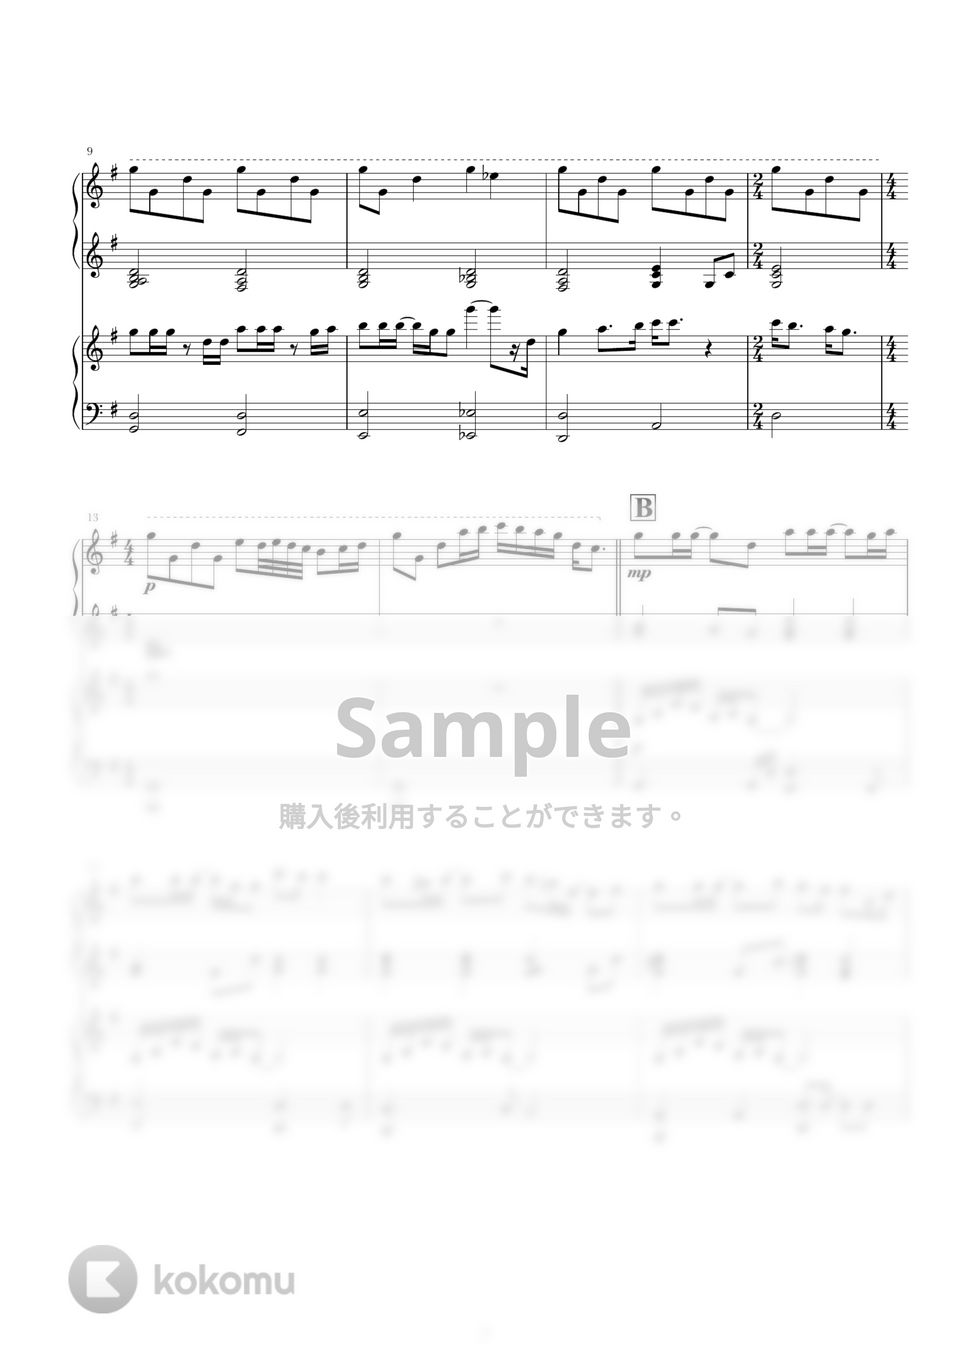 Official髭男dism - Chessboard (ピアノ連弾) by norimaki